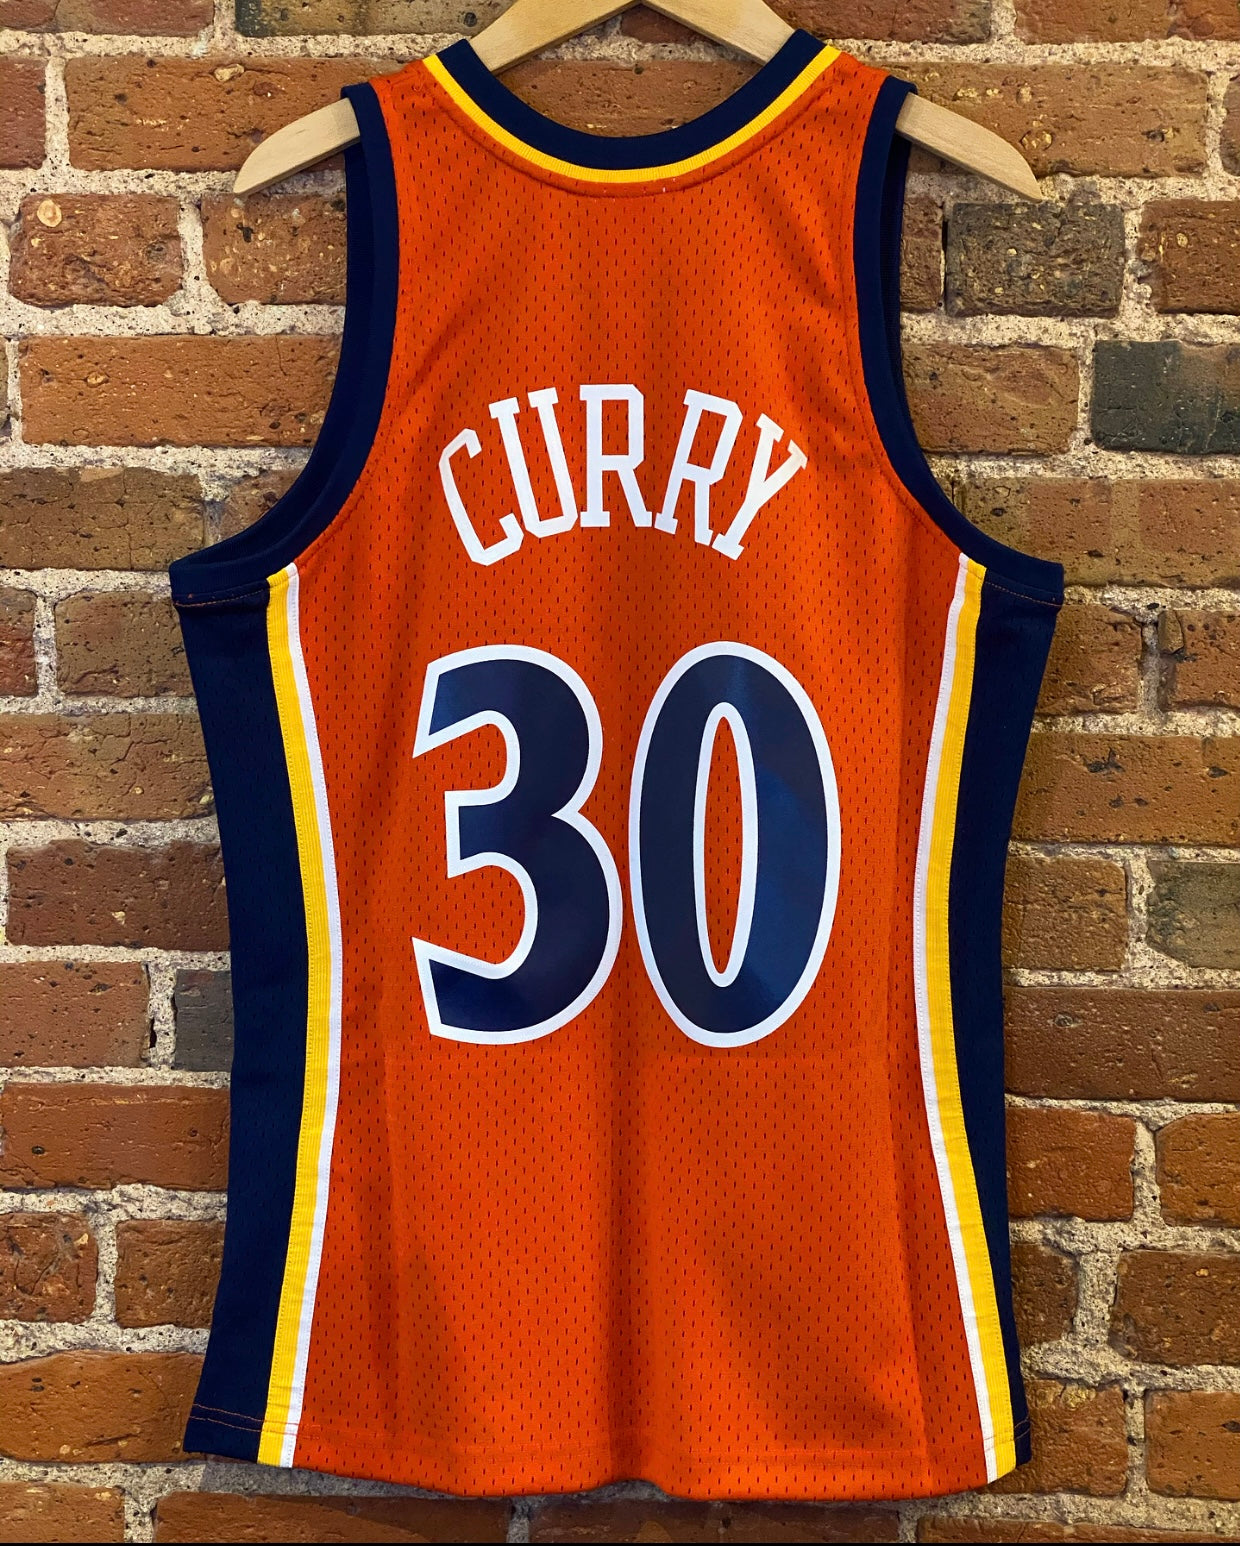 steph curry orange jersey